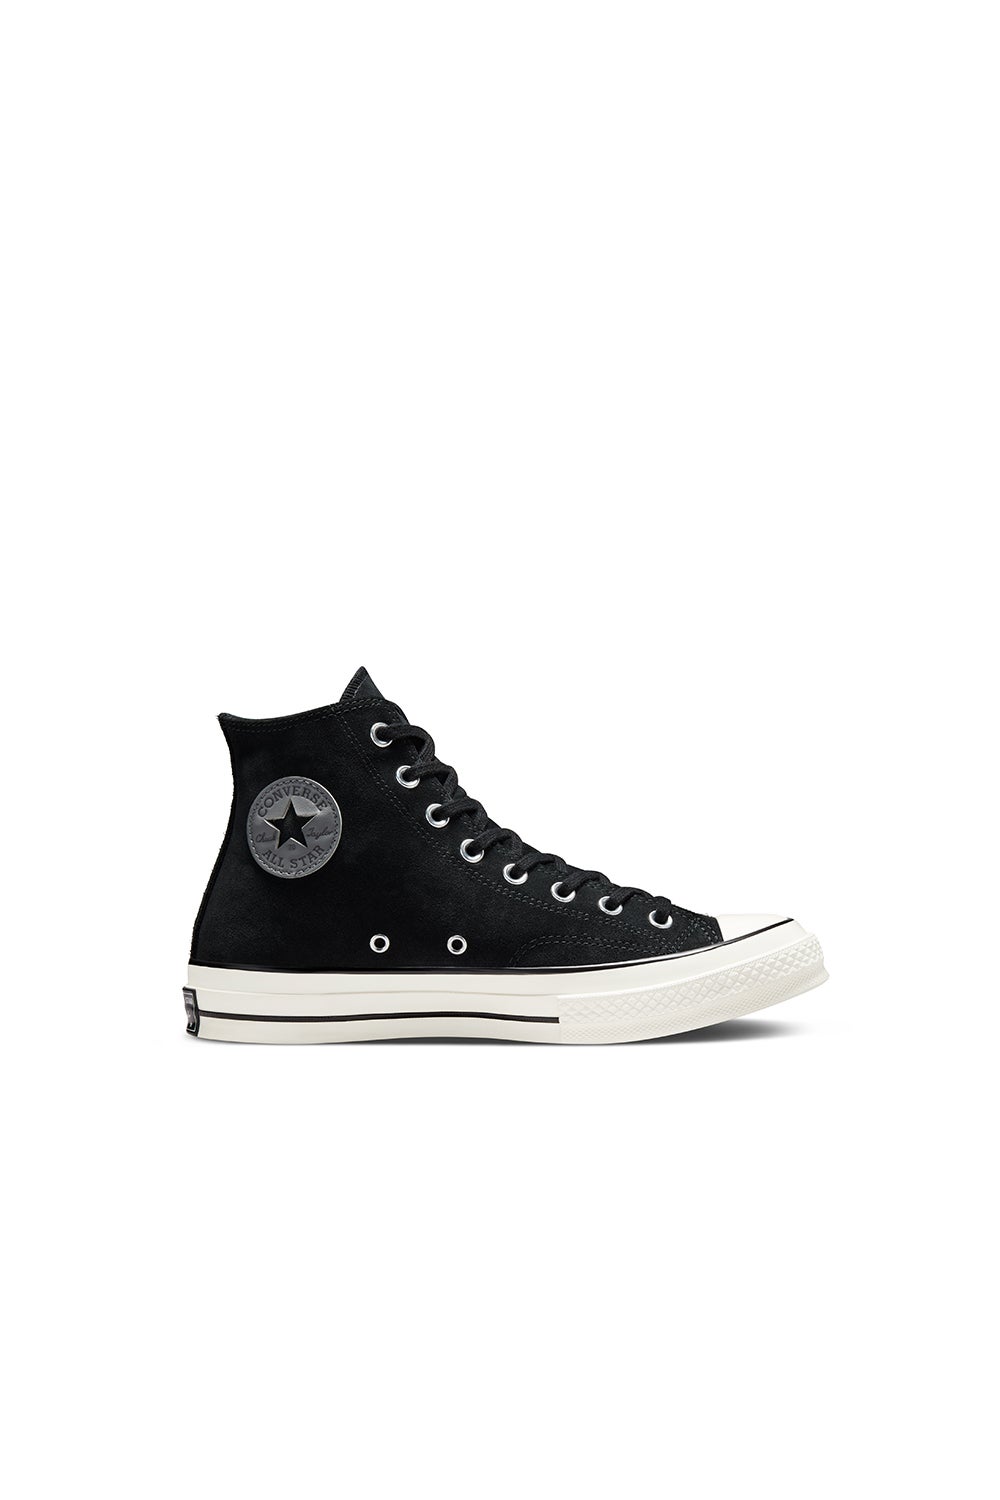 Converse Chuck 70 AT-CX hi-top Sneakers at Rs 3999.00 | Converse Shoes |  ID: 2851675765748